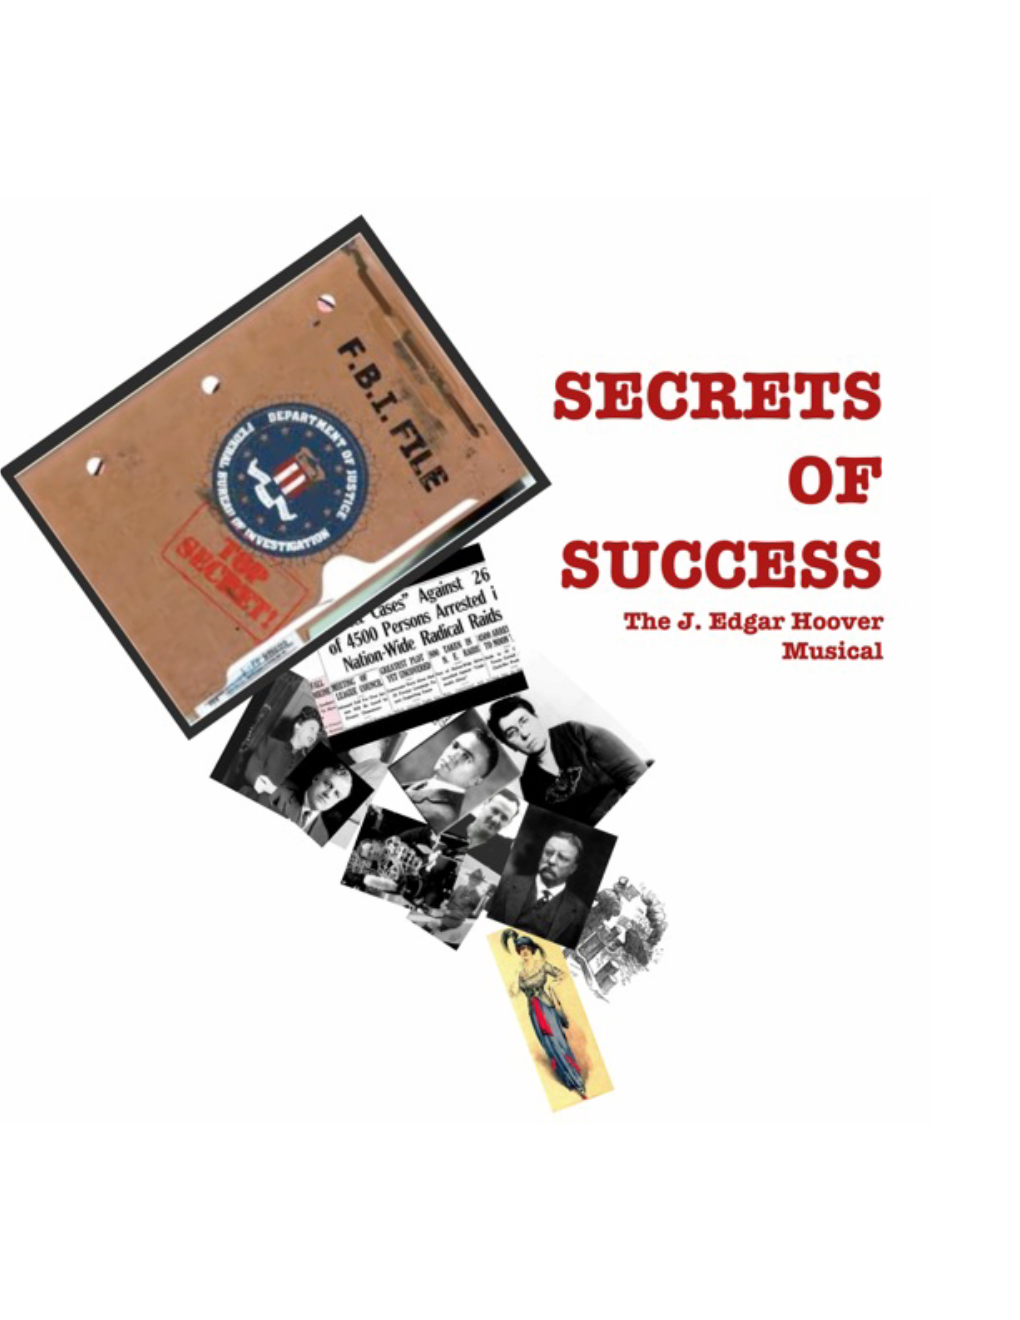 SECRETS of SUCCESS the J.Edgar Hoover Musical 7 23 14